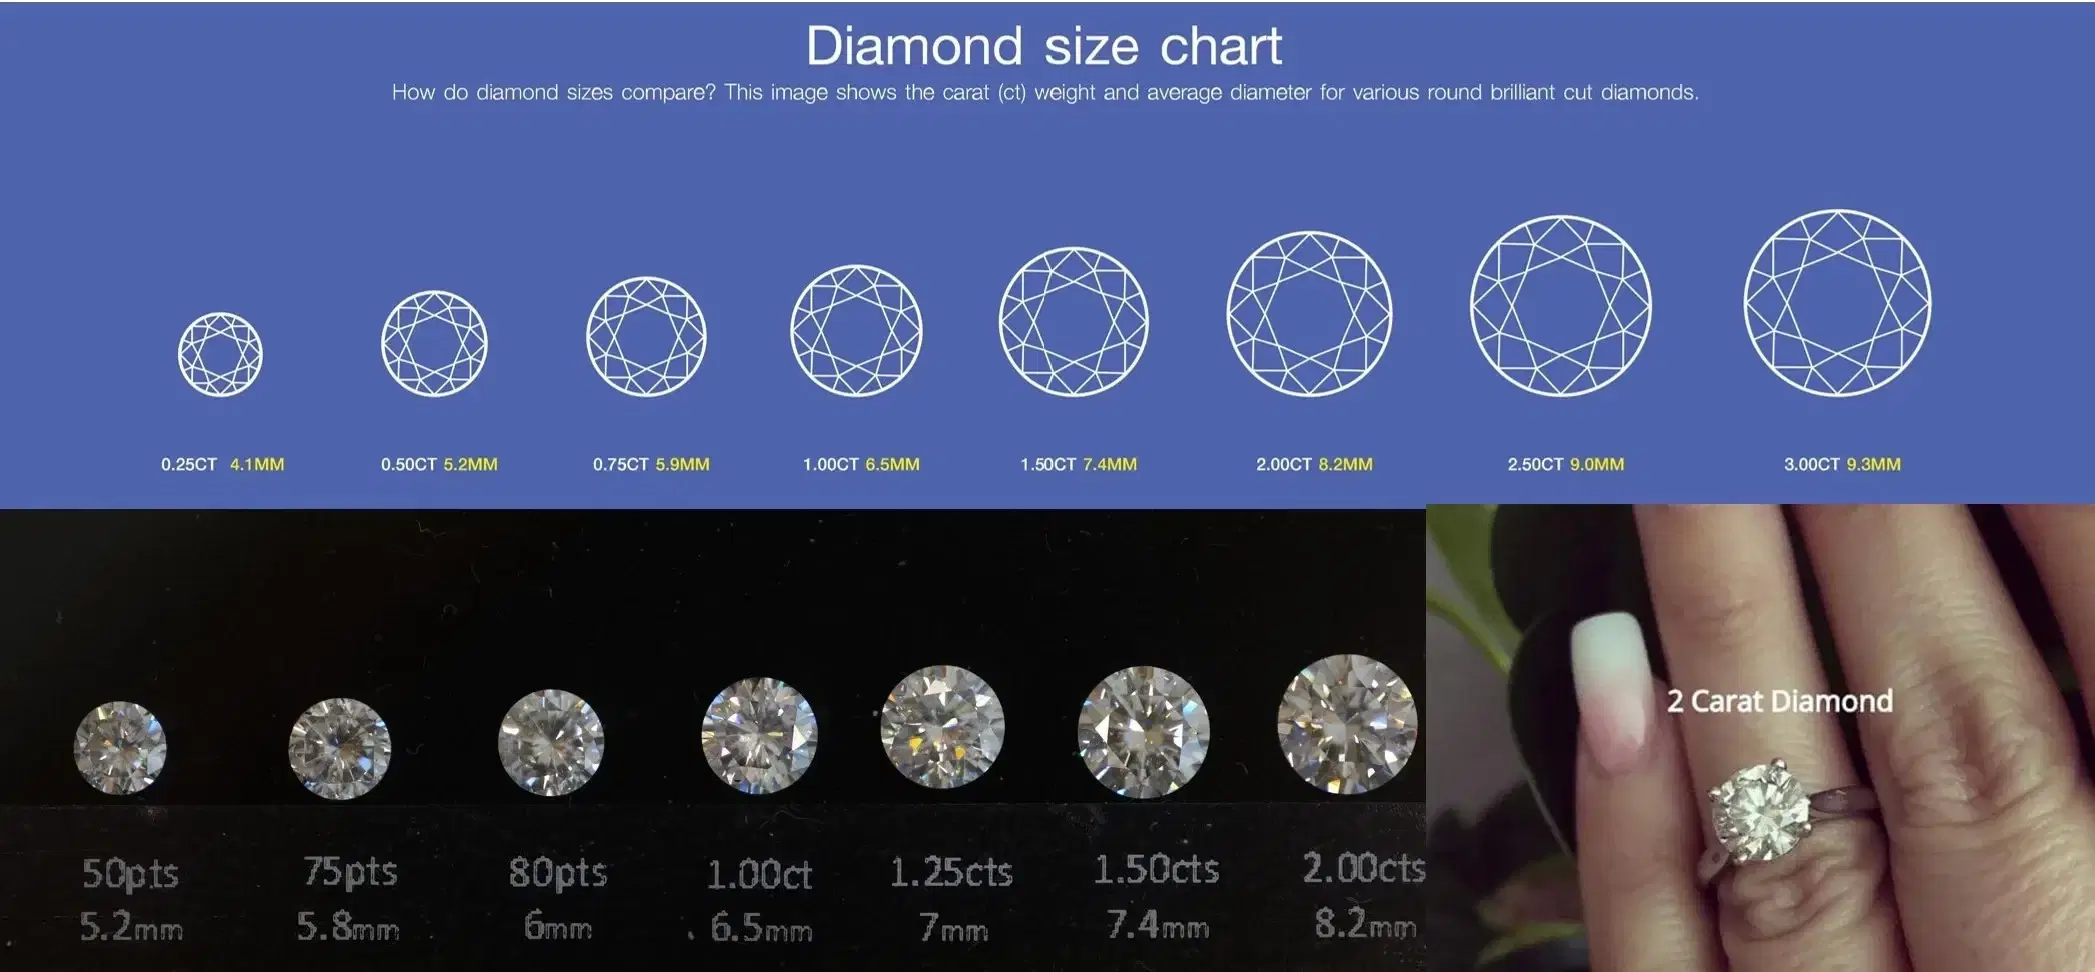 2 Carat Diamond Size